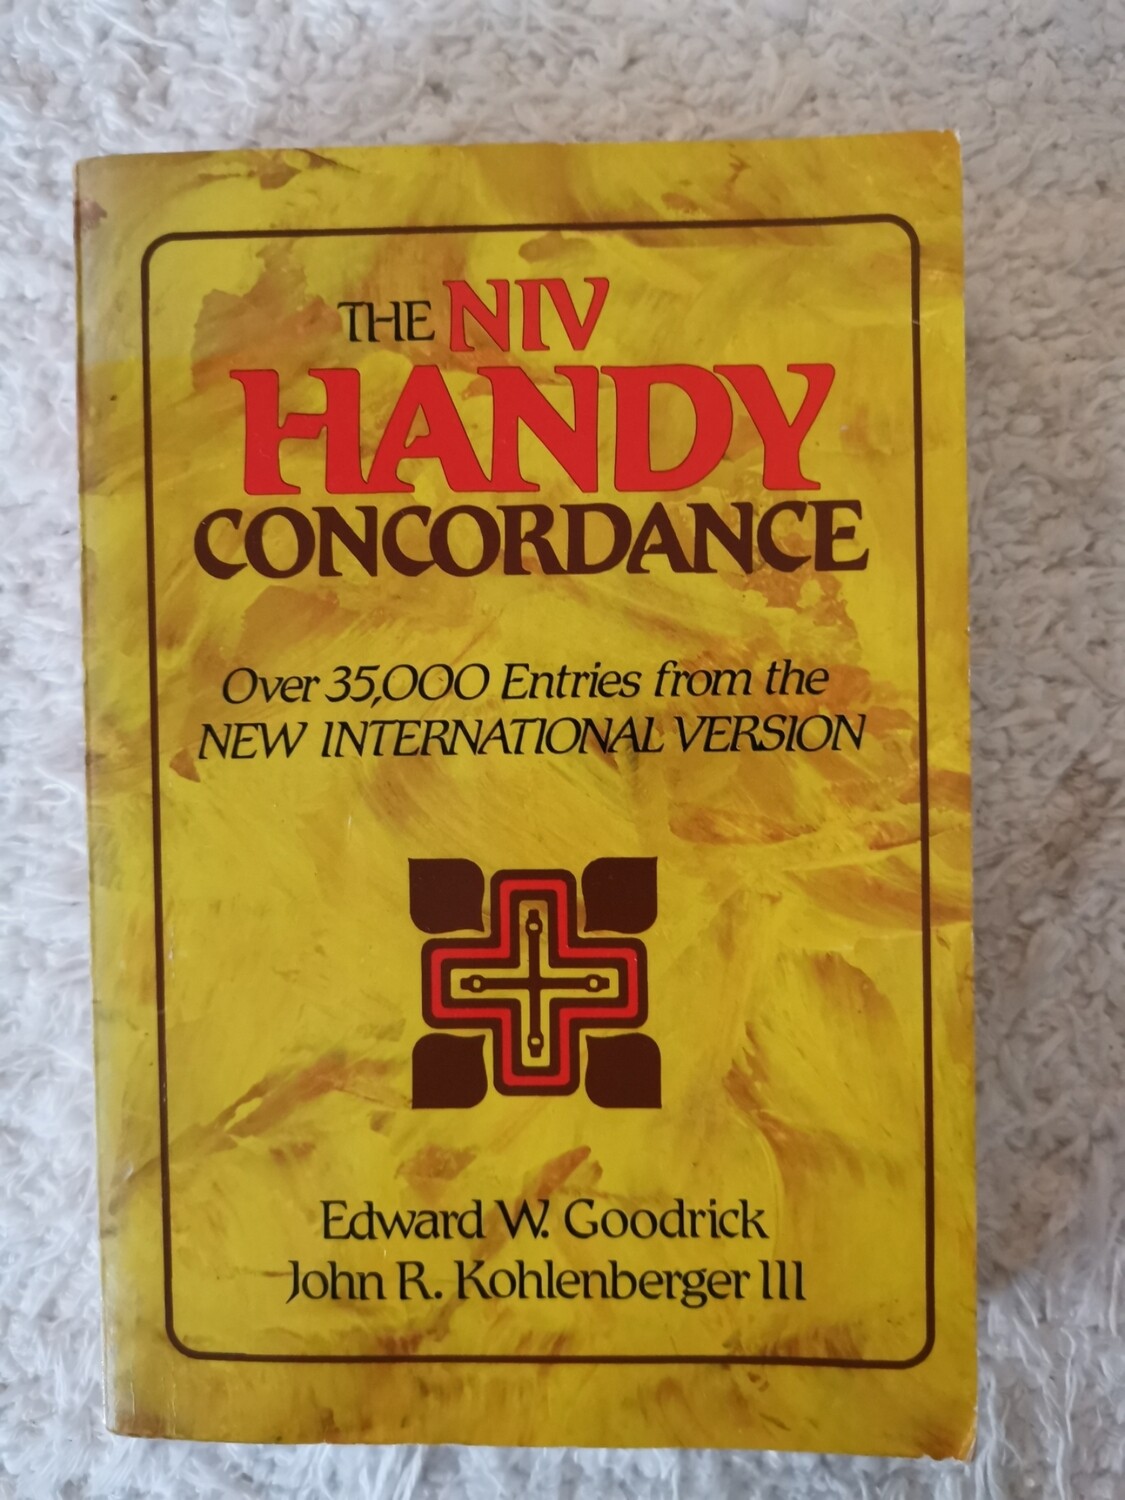 The NIV handy concordance